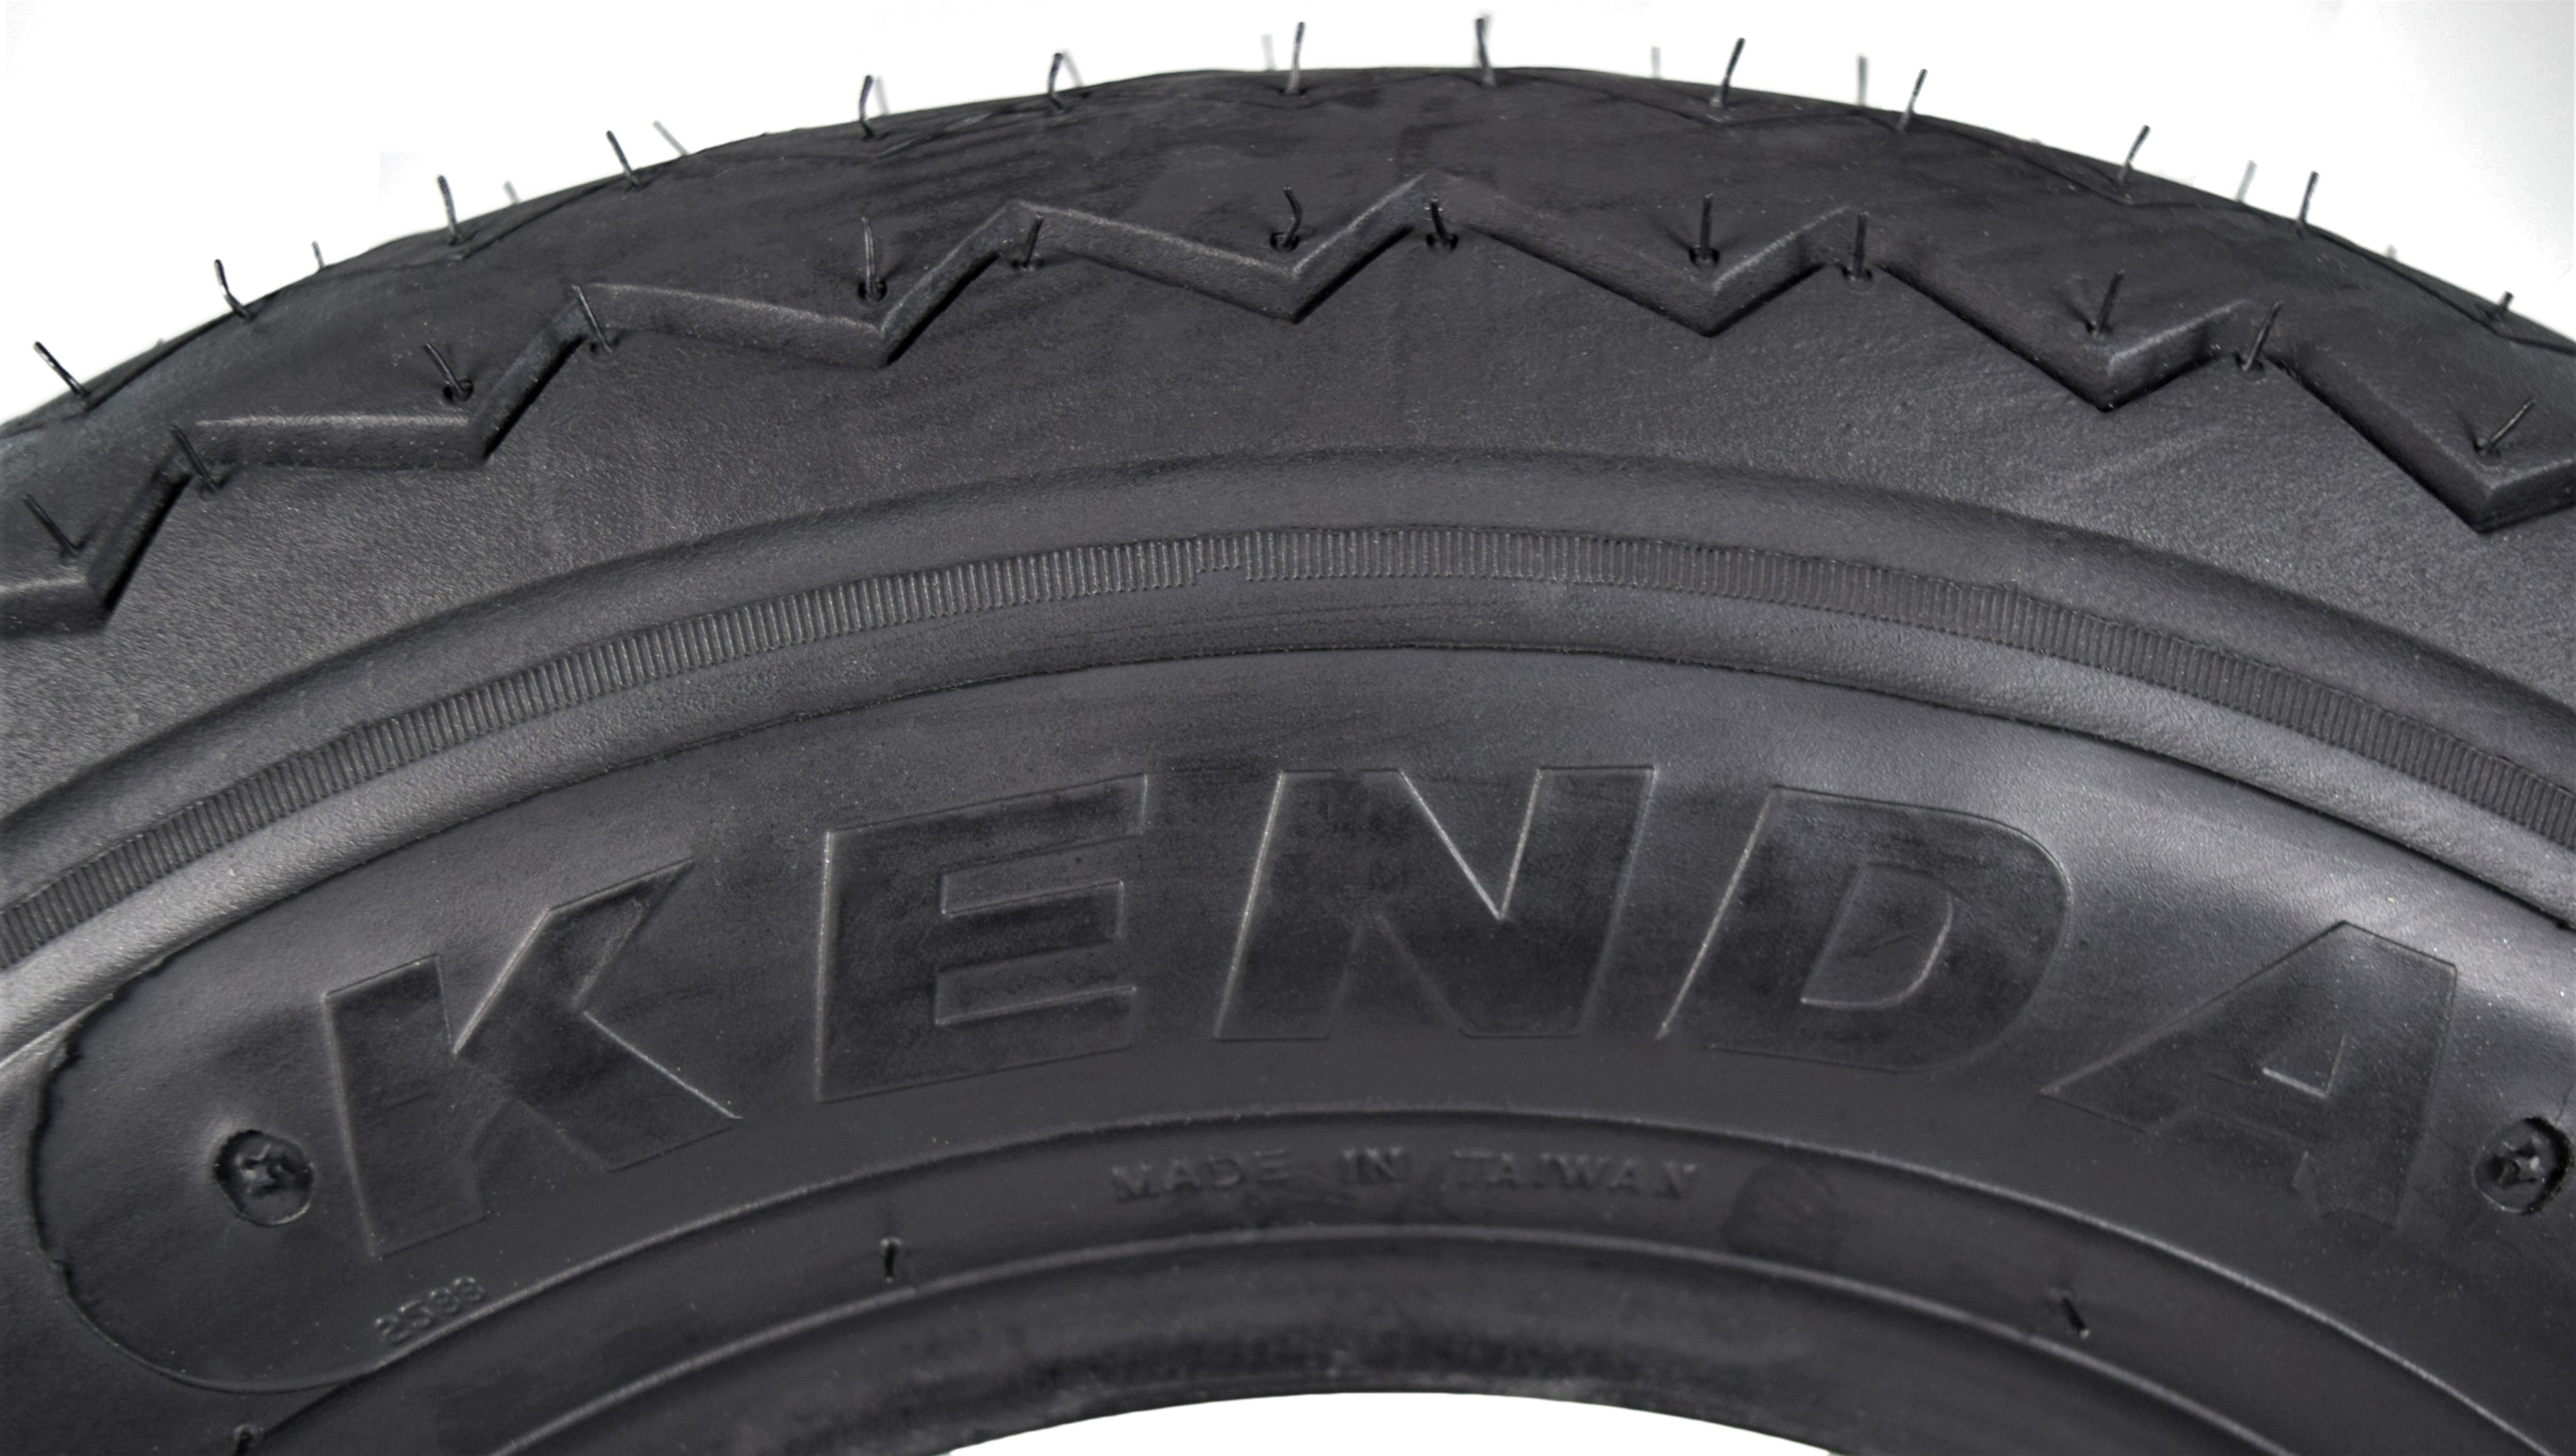 Kenda 235Q2076 20x10-10 Hole-N-1 6 Ply Tubeless Golf Cart Turf Tires 4 Pack